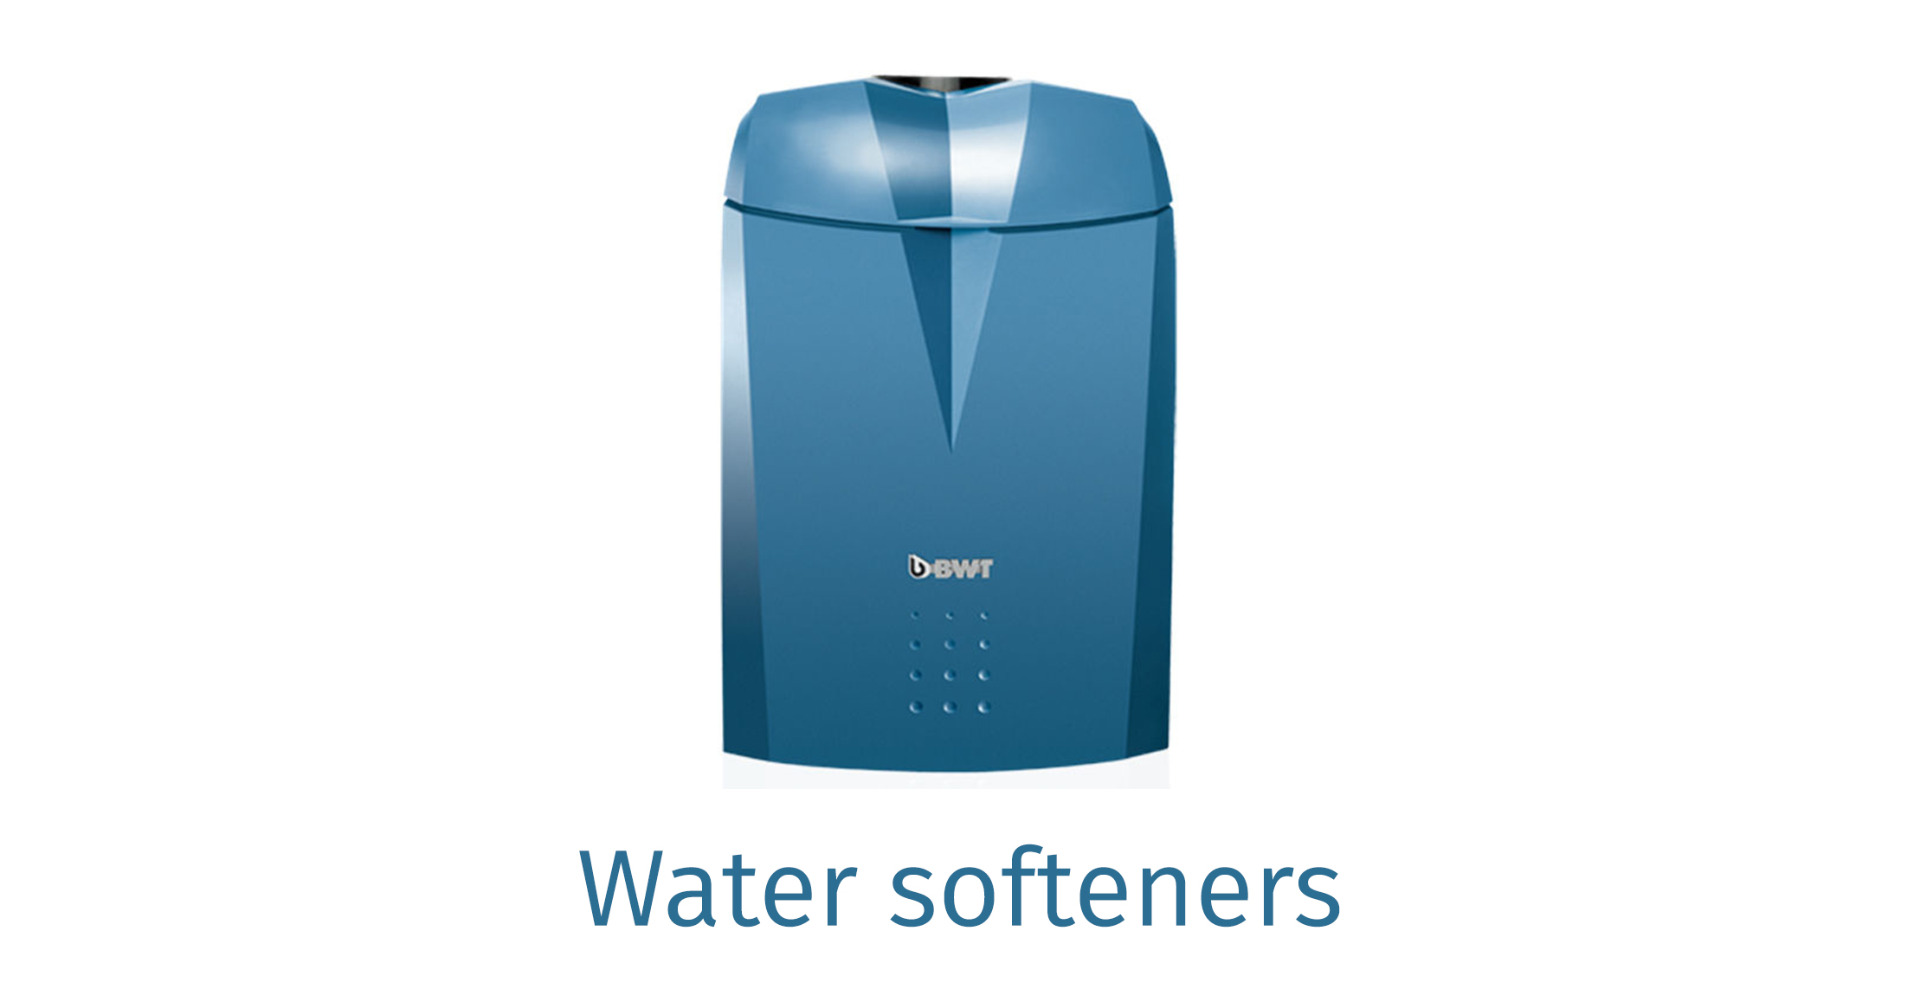 bwt aqa life s water softener